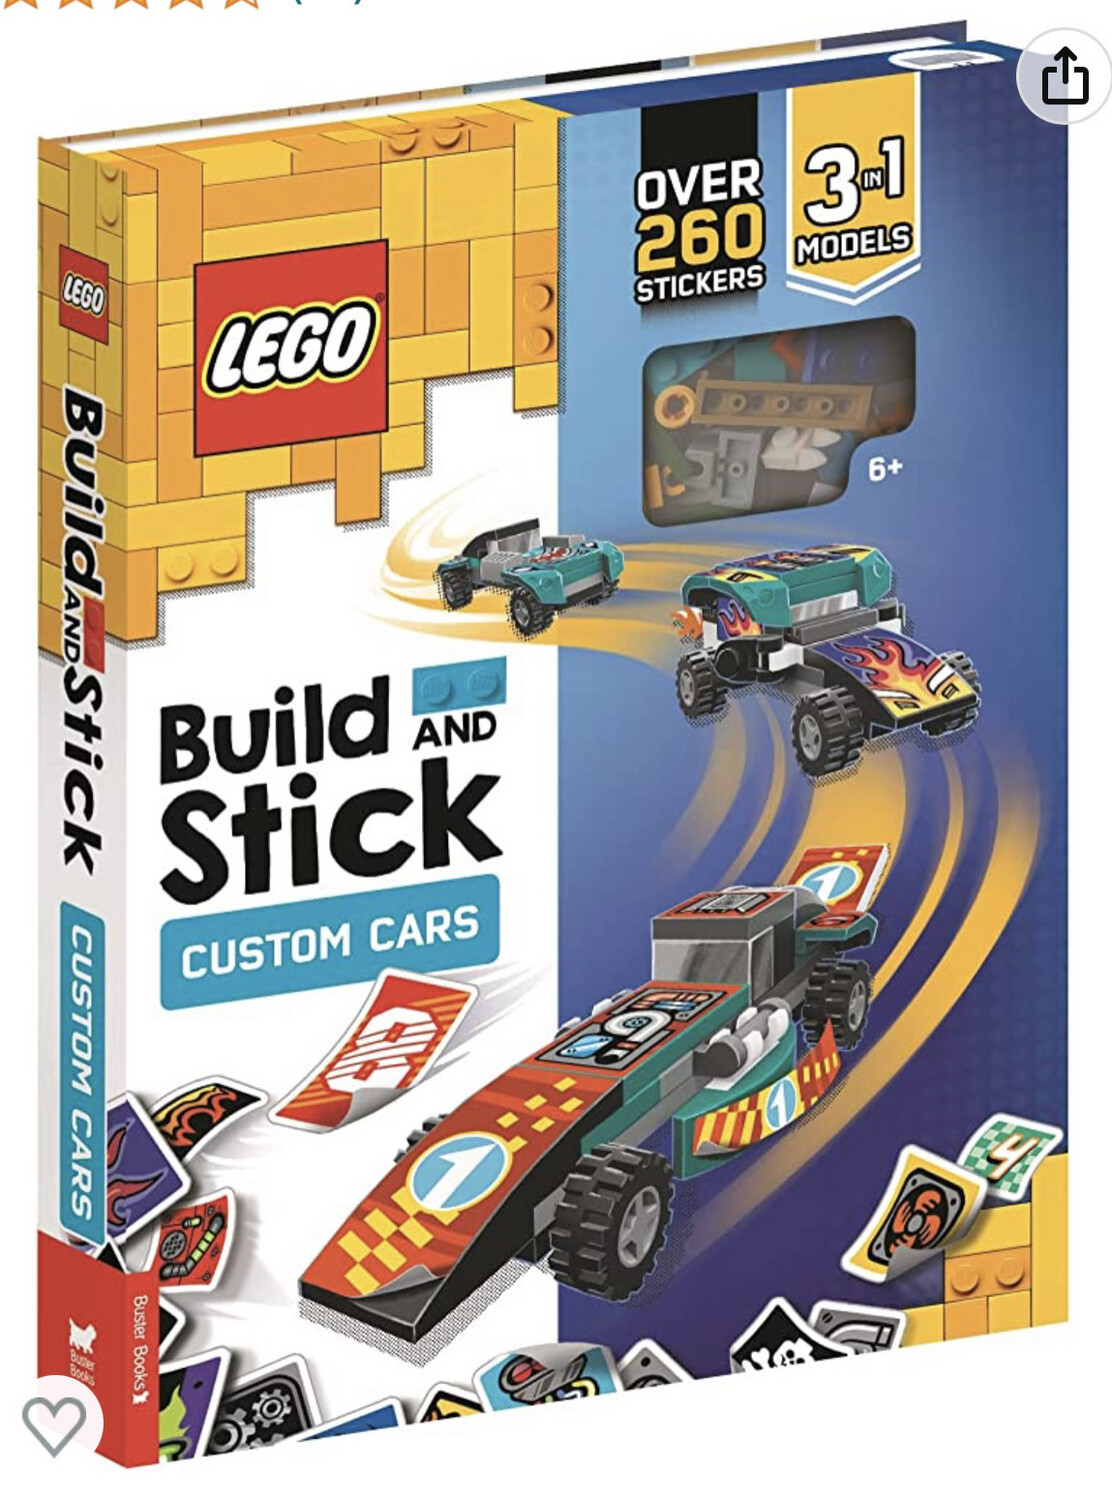 Lego. Build And Stick. Custom Cars